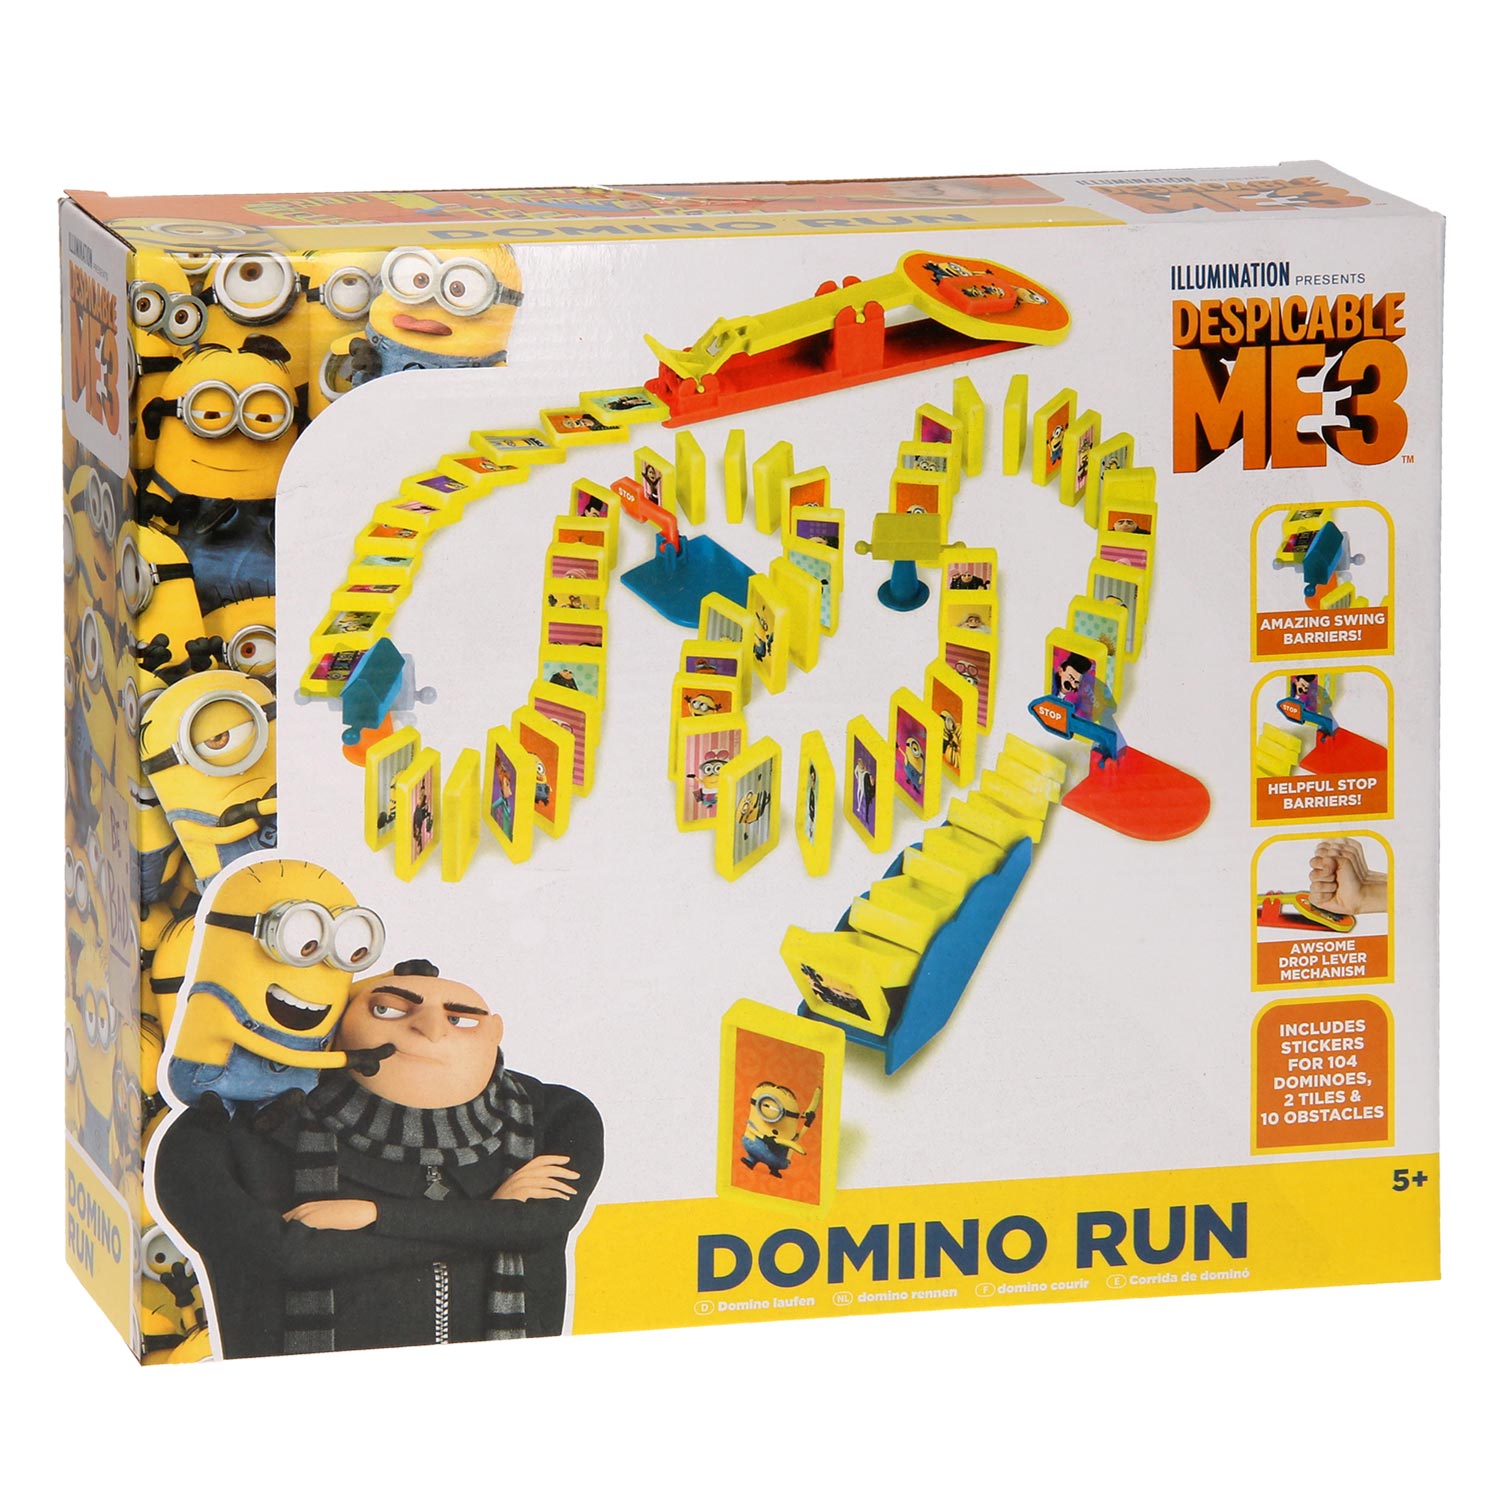 Despicable Me 3 Domino Run